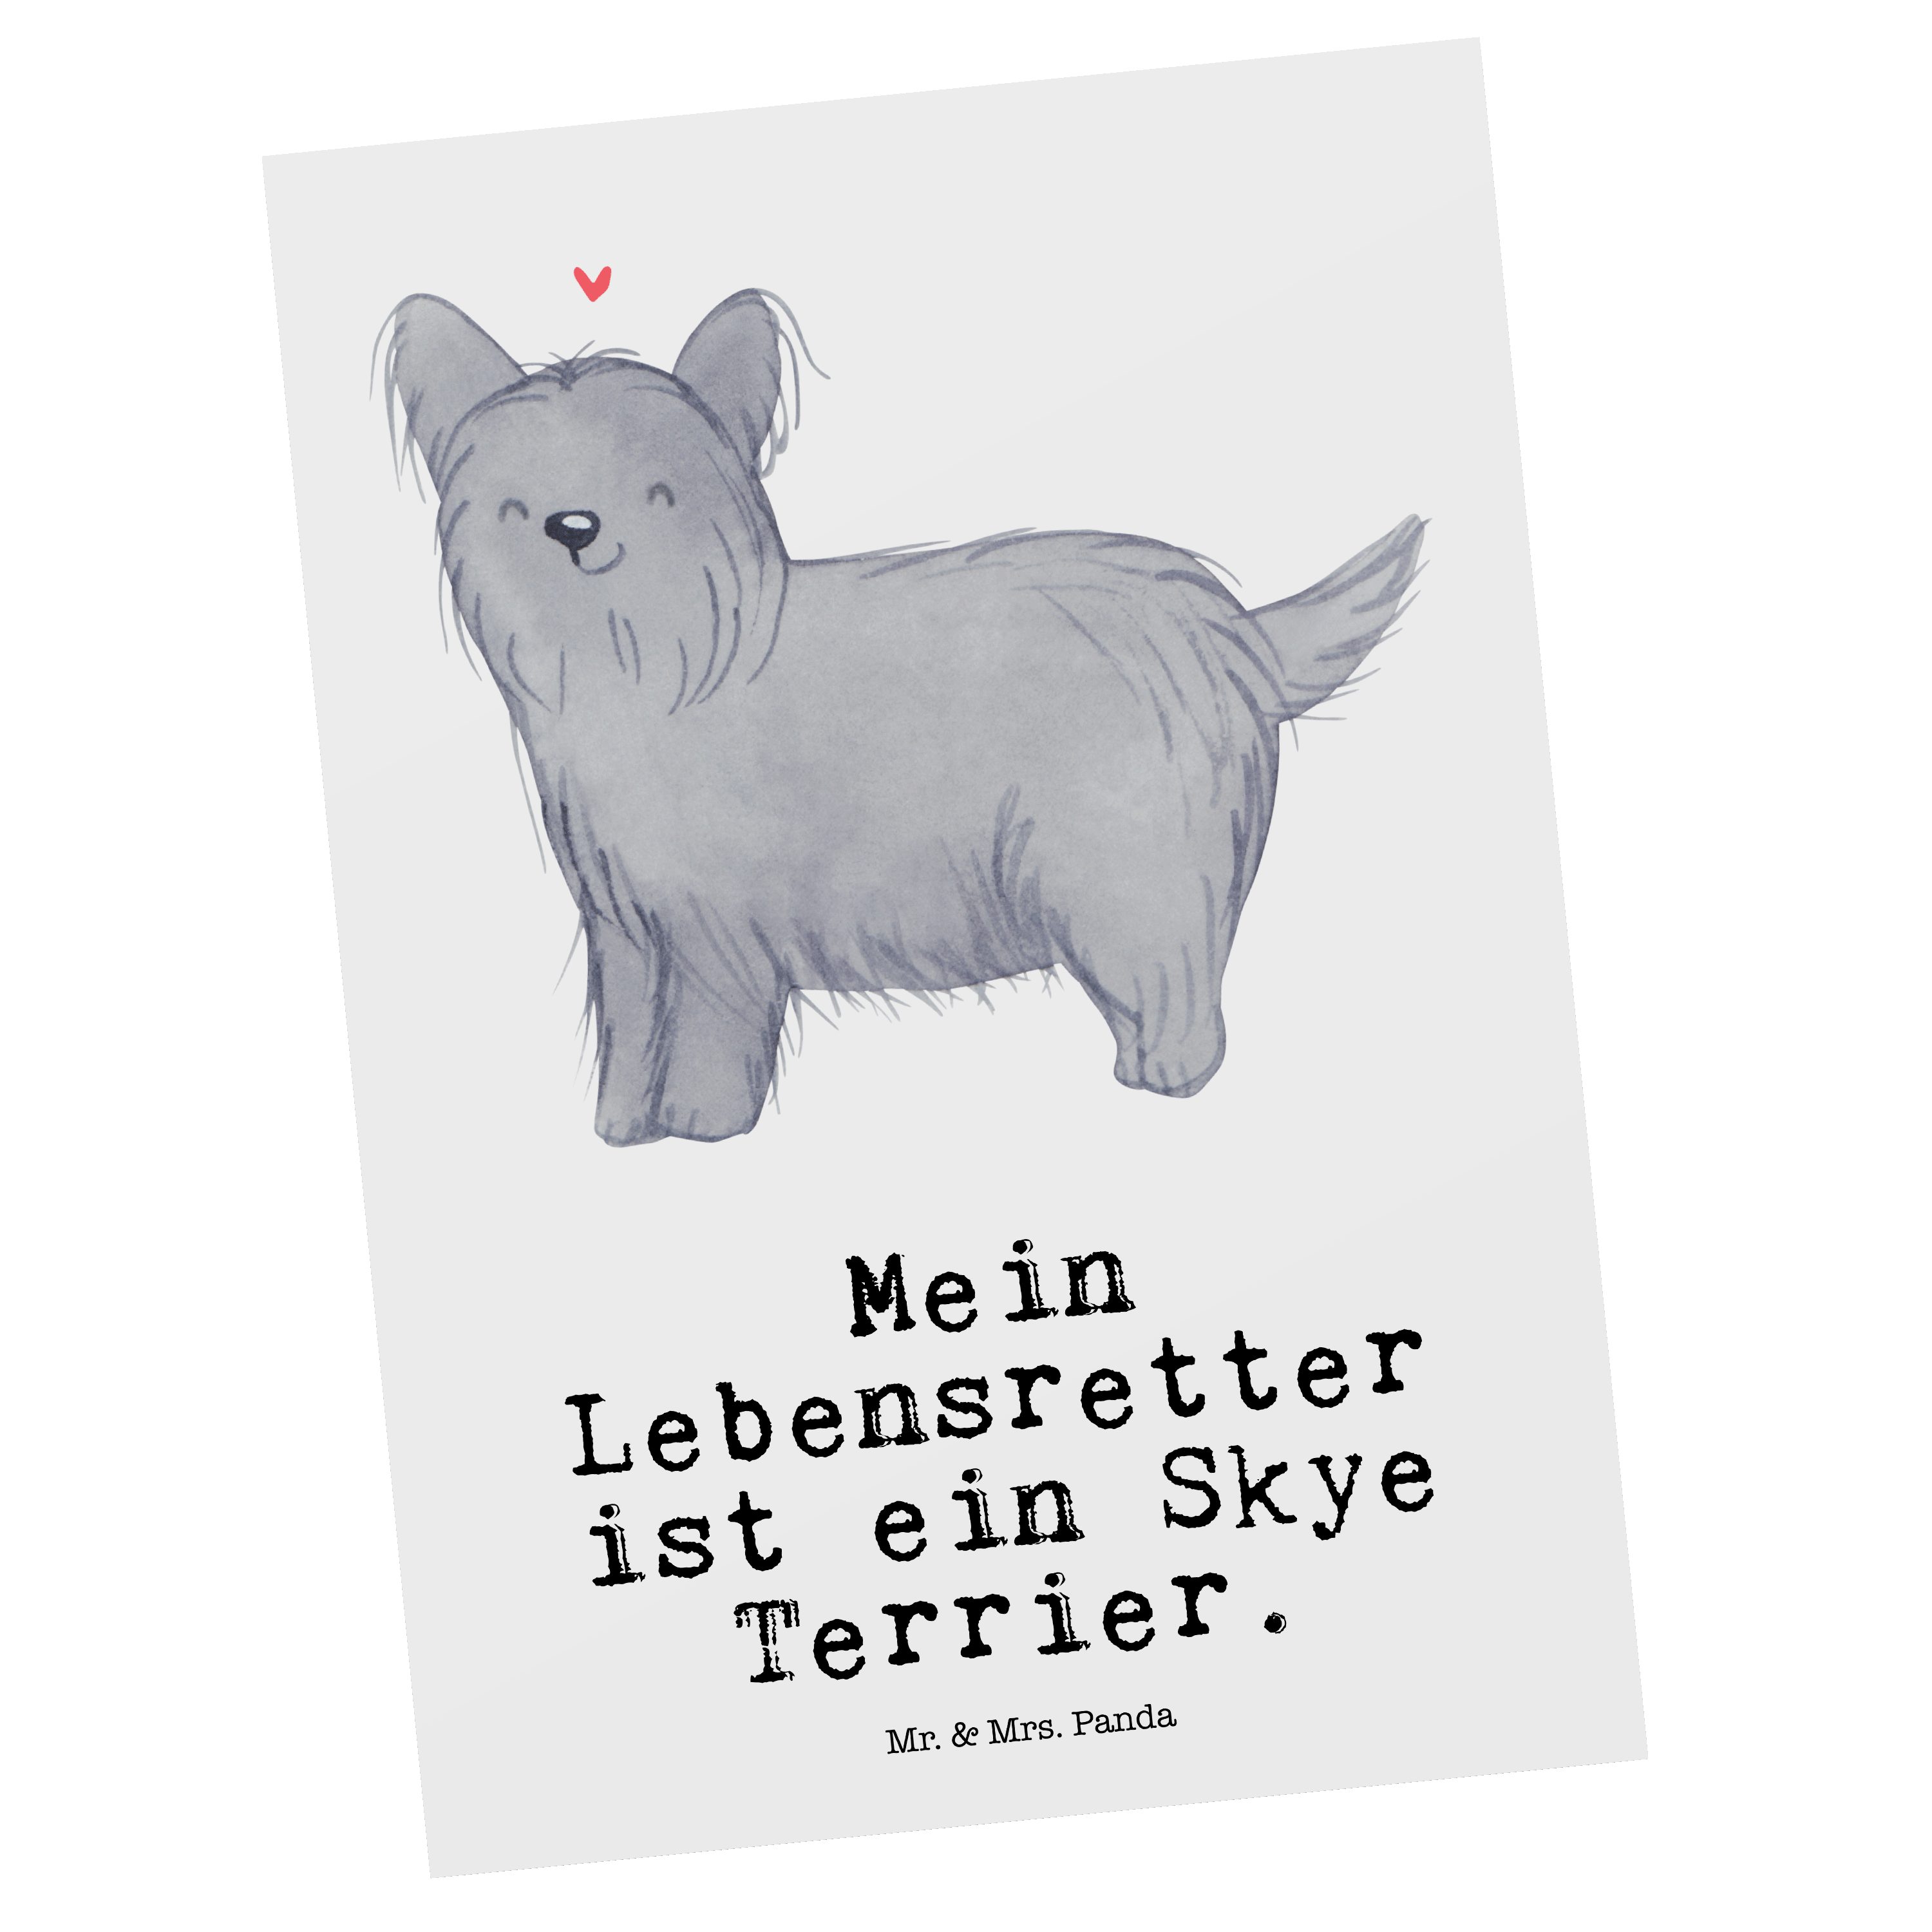 Mr. & Mrs. Panda Postkarte Skye Terrier Lebensretter - Weiß - Geschenk, Einladungskarte, Welpe